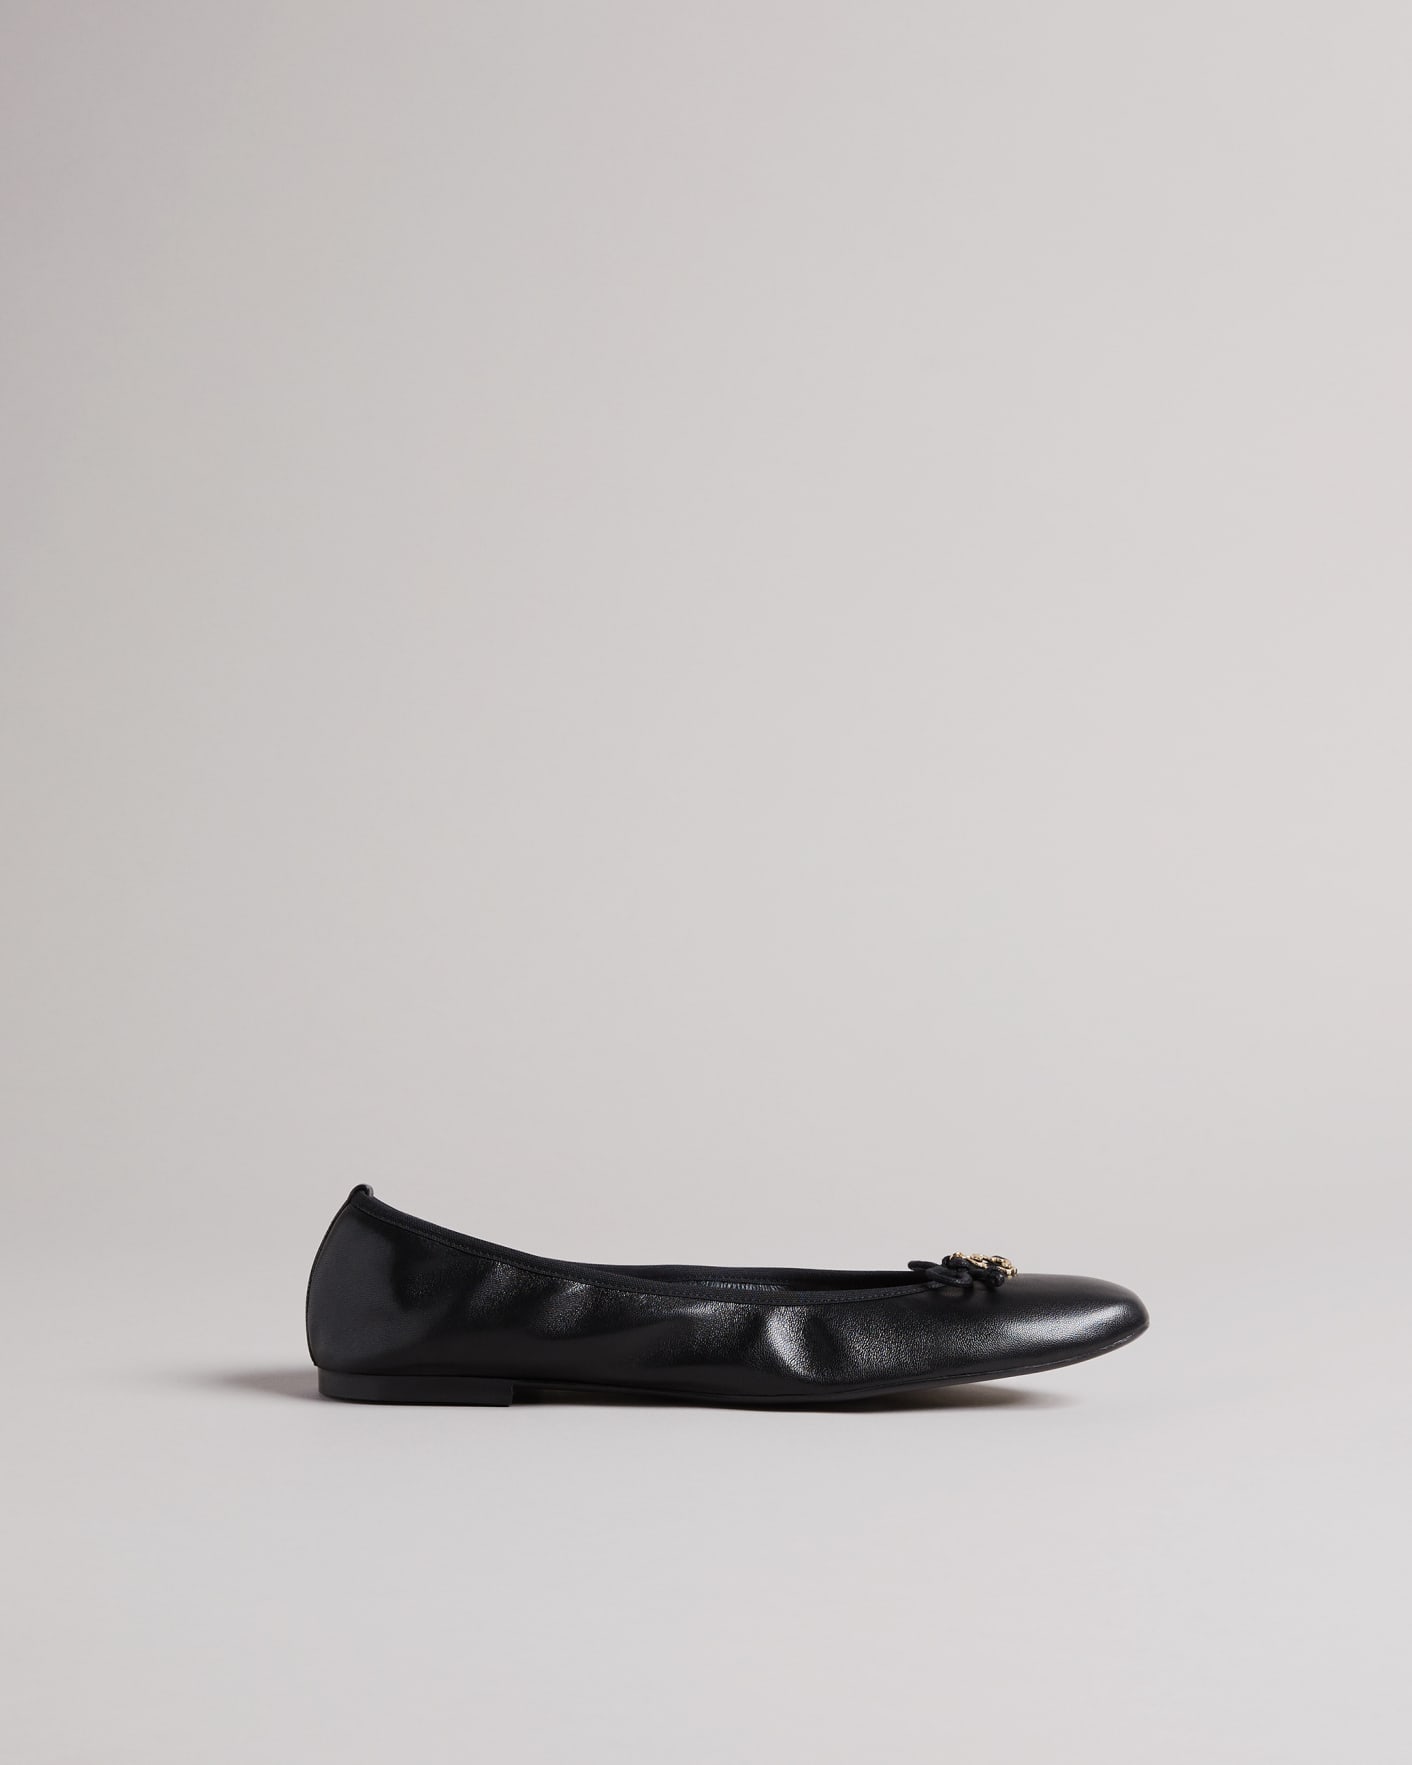 Black Leather Bow Ballet Pump Shoe Ted Baker